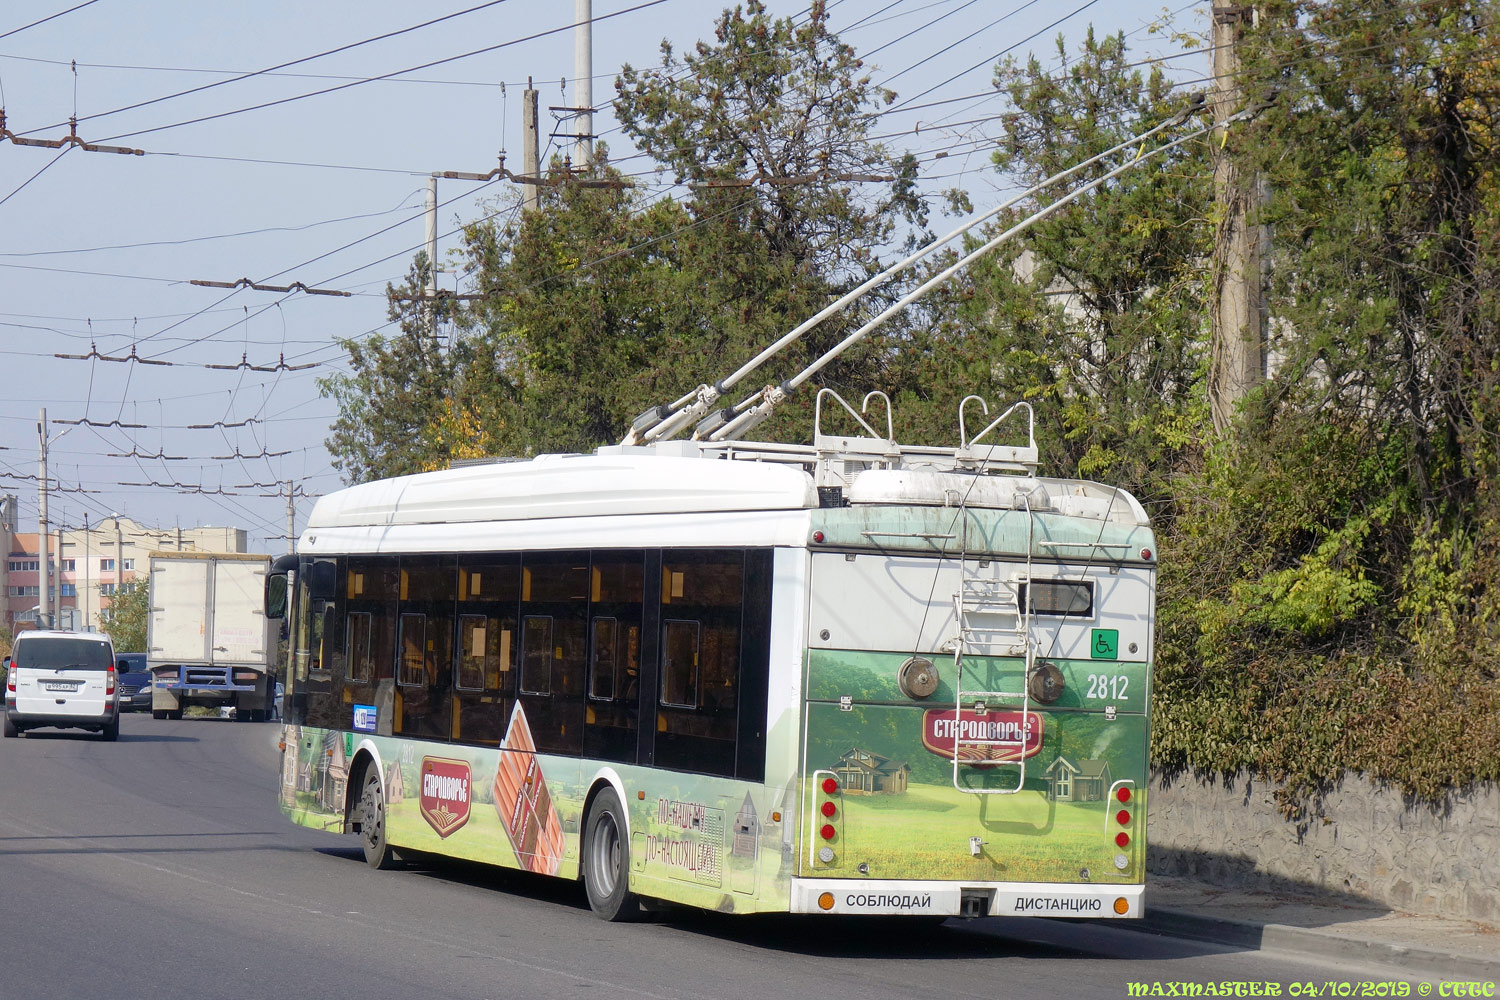 Krimski trolejbus, Trolza-5265.03 “Megapolis” č. 2812